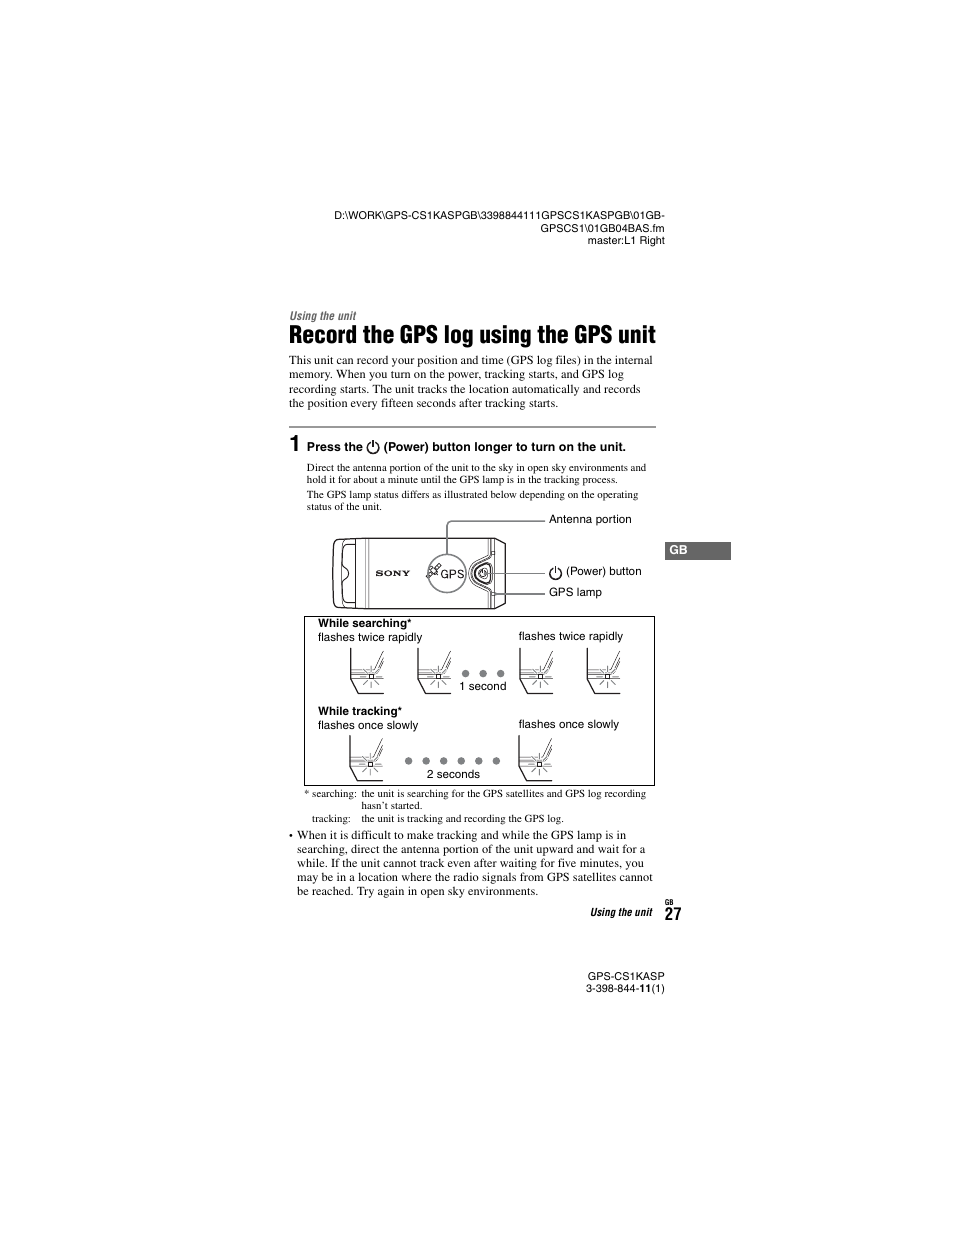 Using the unit, Record the gps log using the gps unit | Sony GPS-CS1KASP Manuel d'utilisation | Page 27 / 91